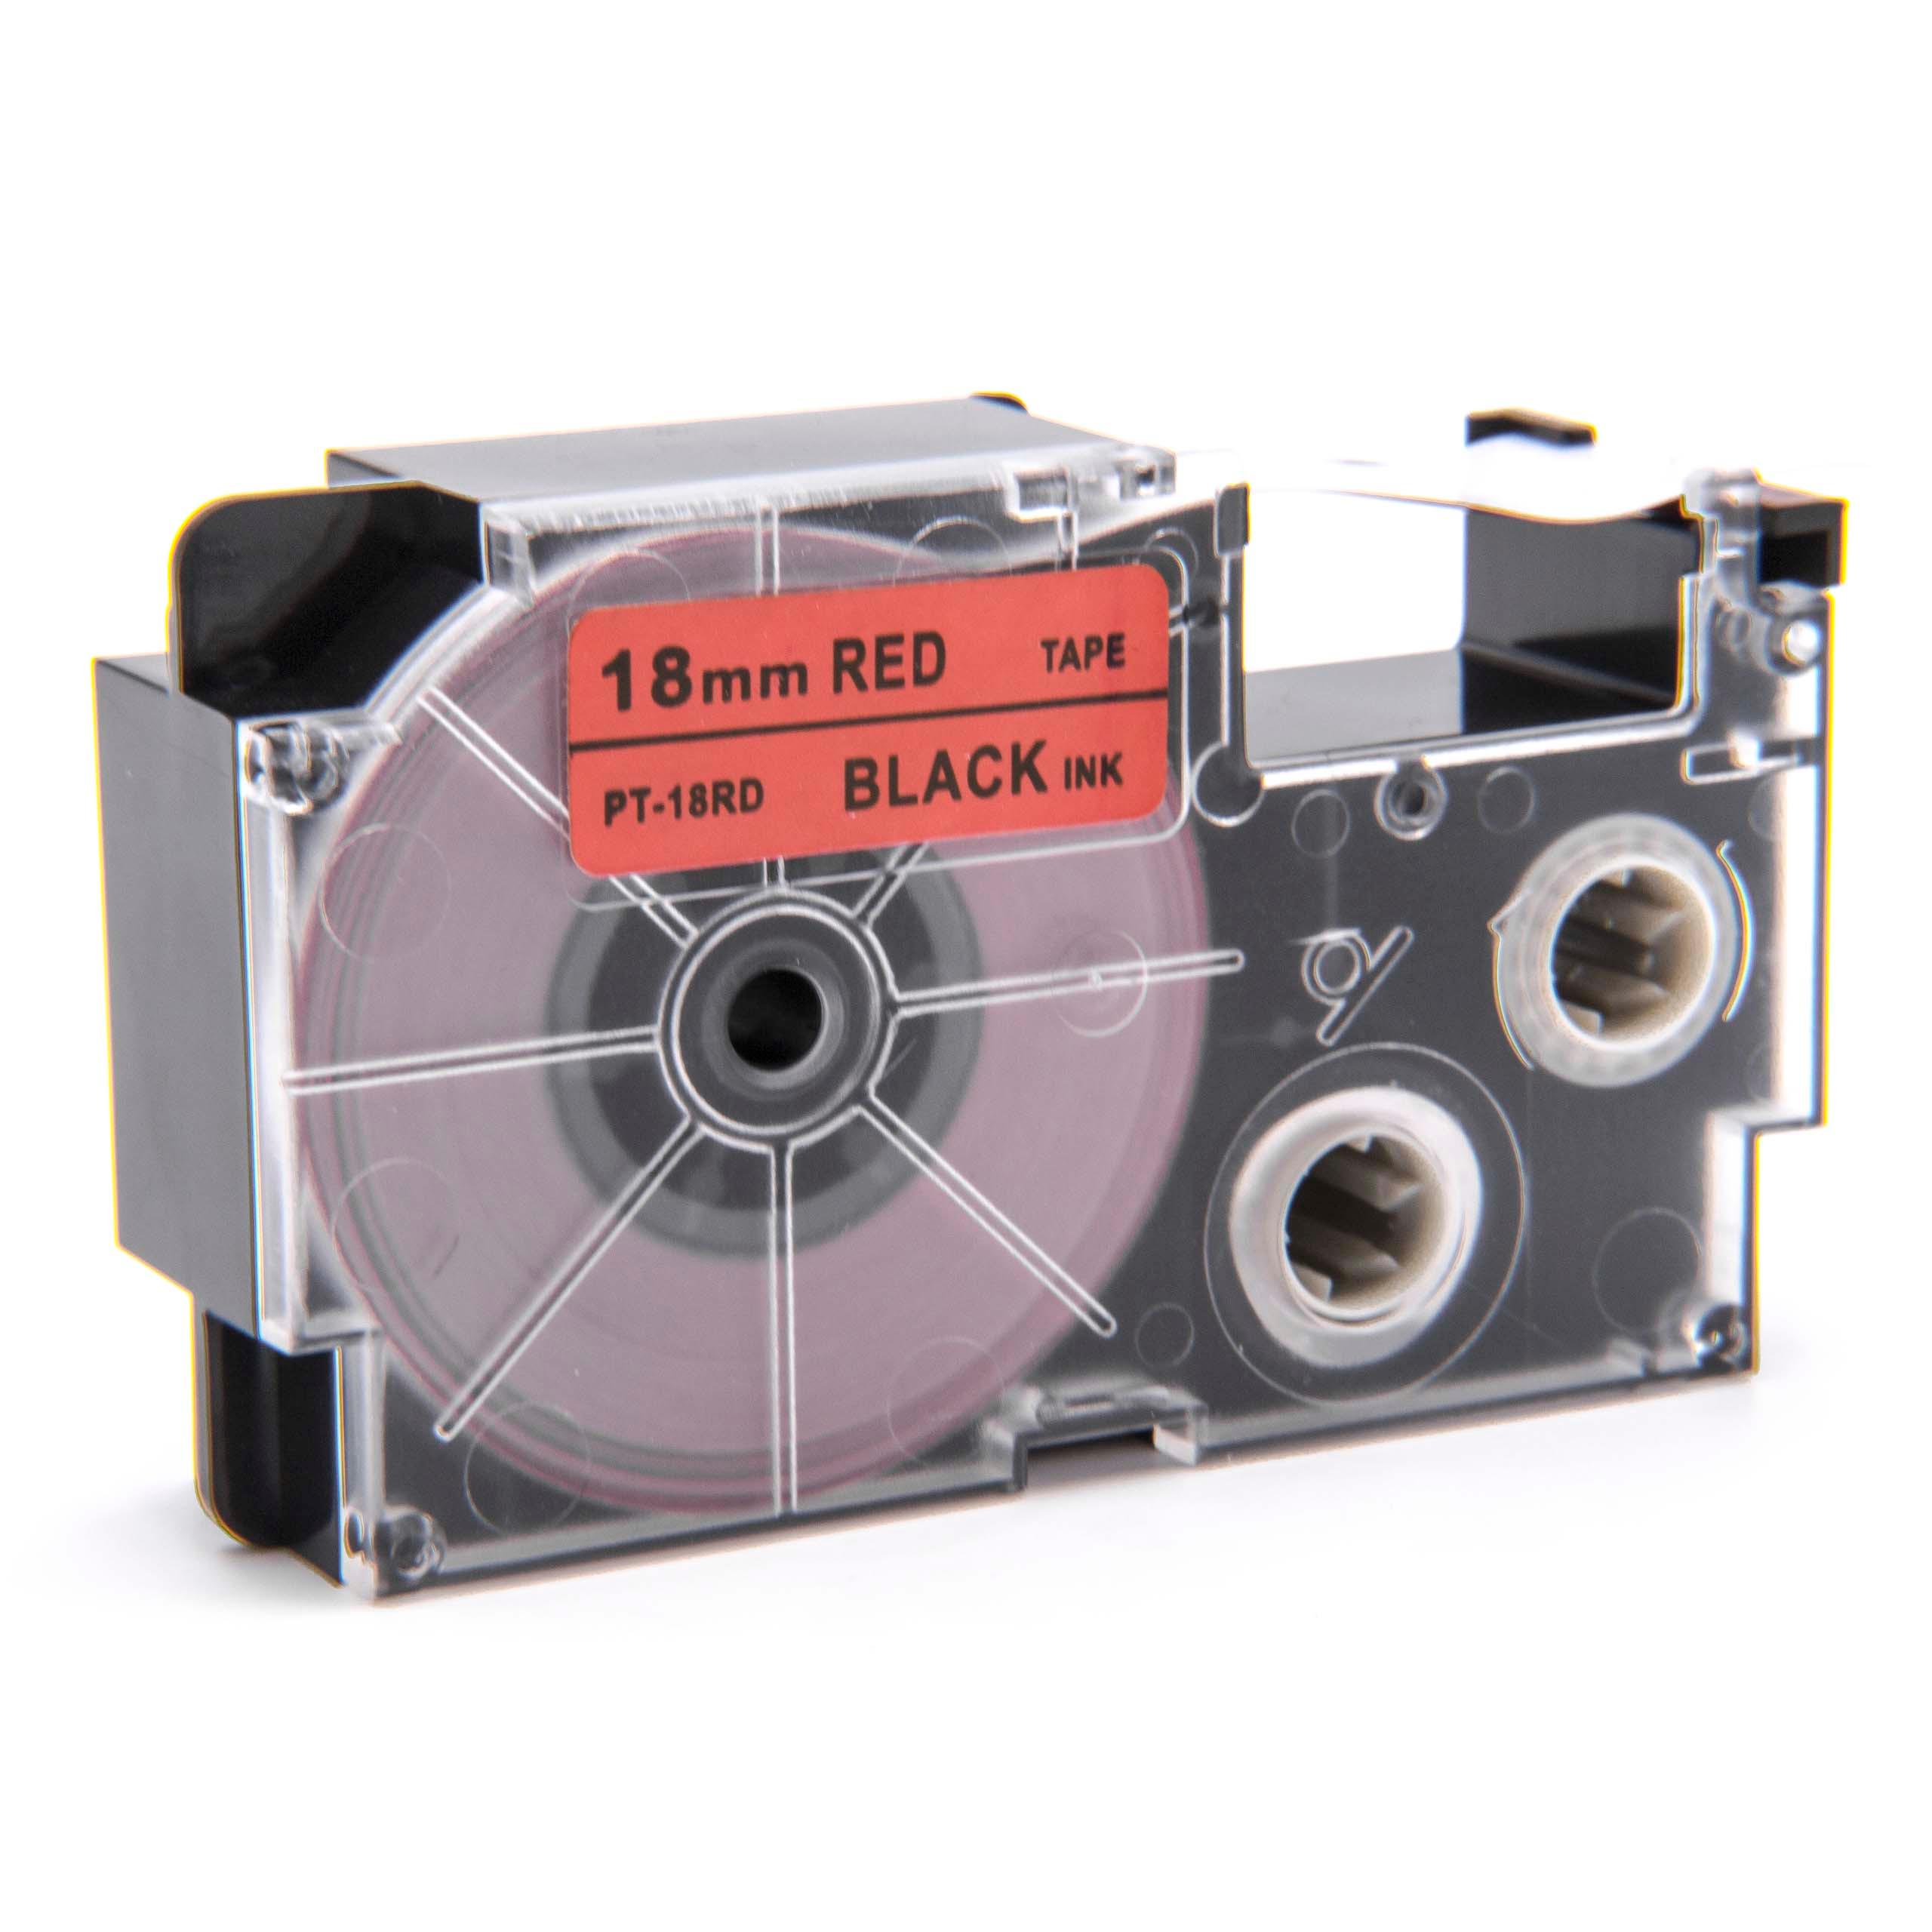 Cassetta nastro sostituisce Casio XR-18RD1, XR-18RD per etichettatrice Casio 18mm nero su rosso, pet+ RESIN